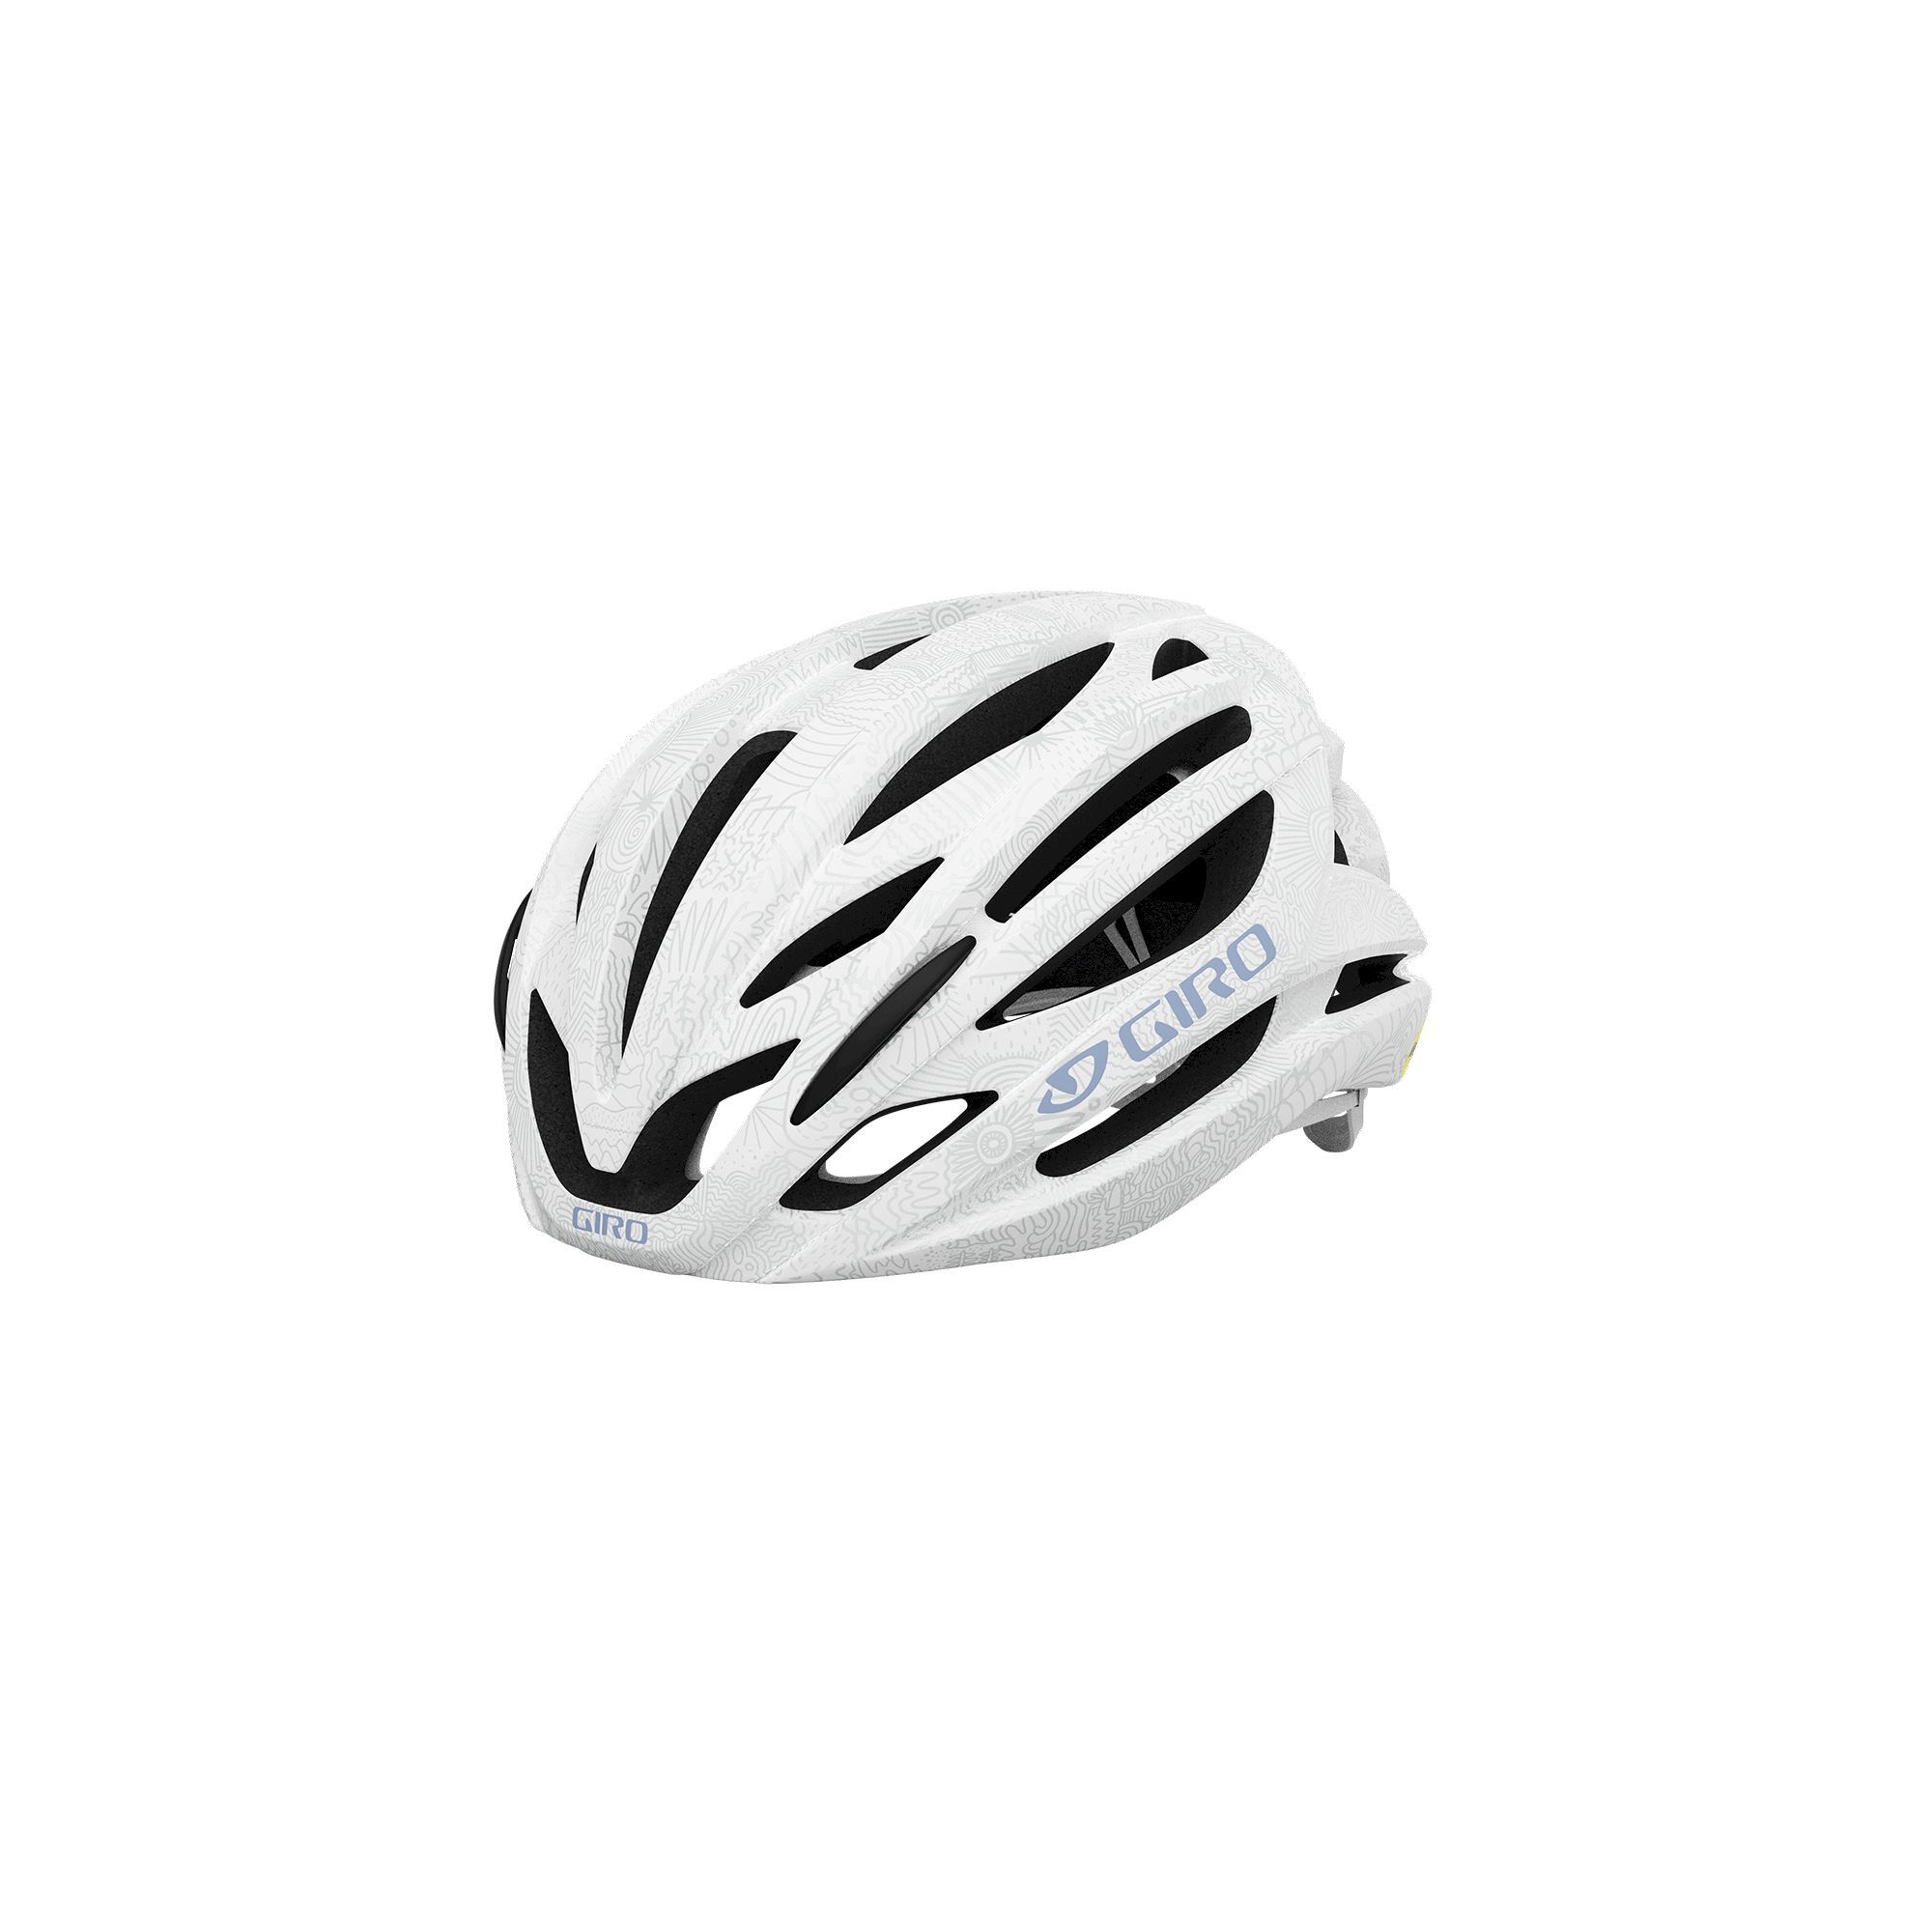 Giro Seyen Mips - Road bike helmet - Women's